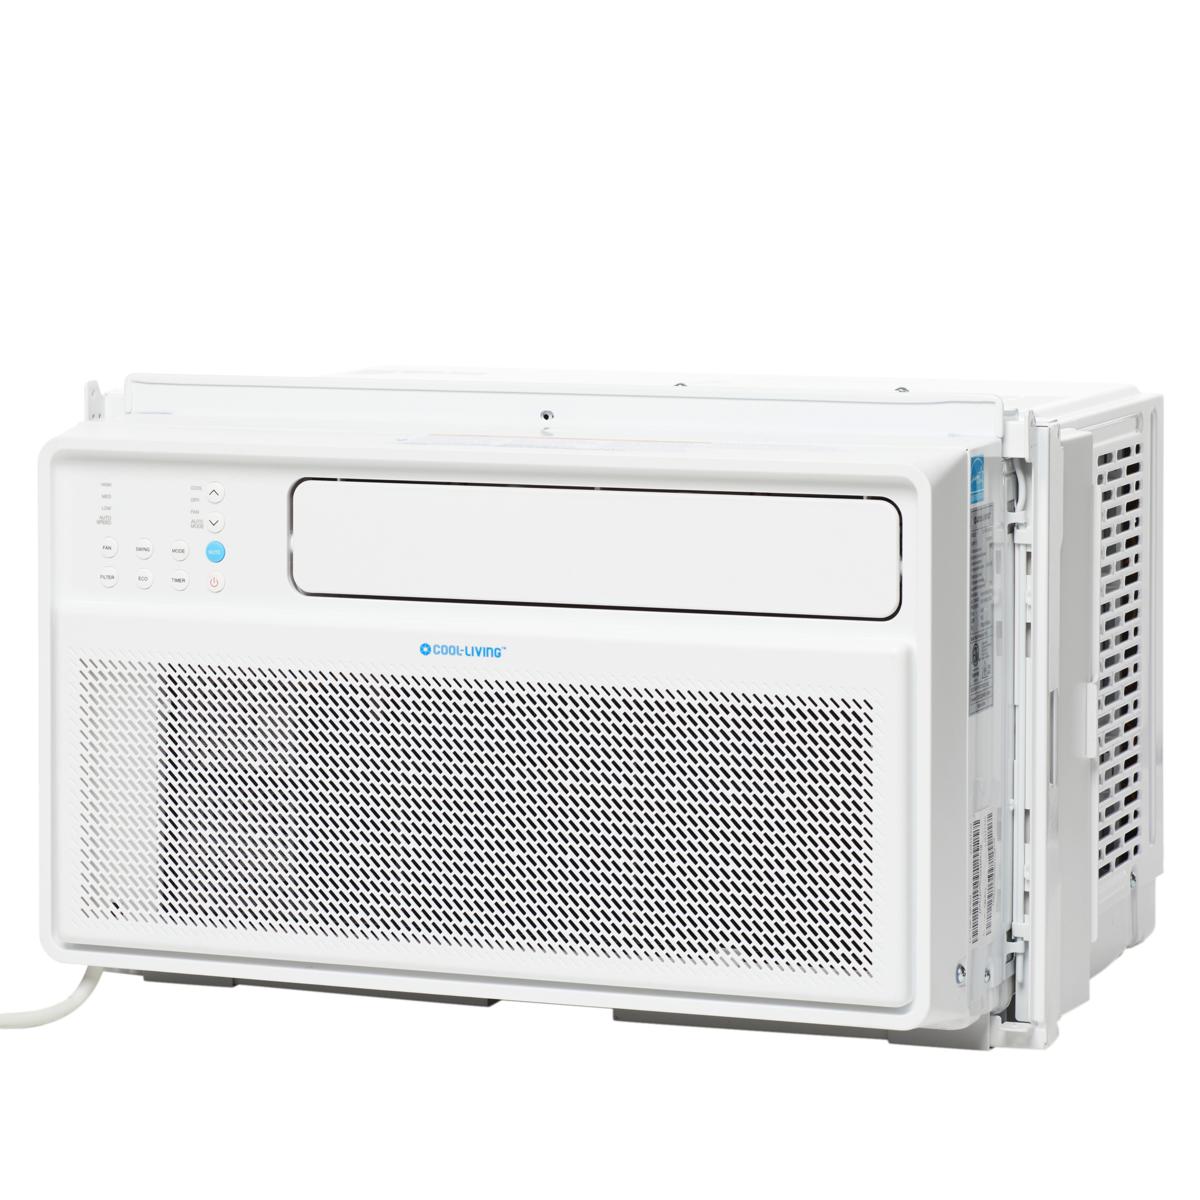 Cool-Living 8,000 BTU AC Unit 42db Ultra Quiet, 35% Energy Savings Digital Display and Remote, White